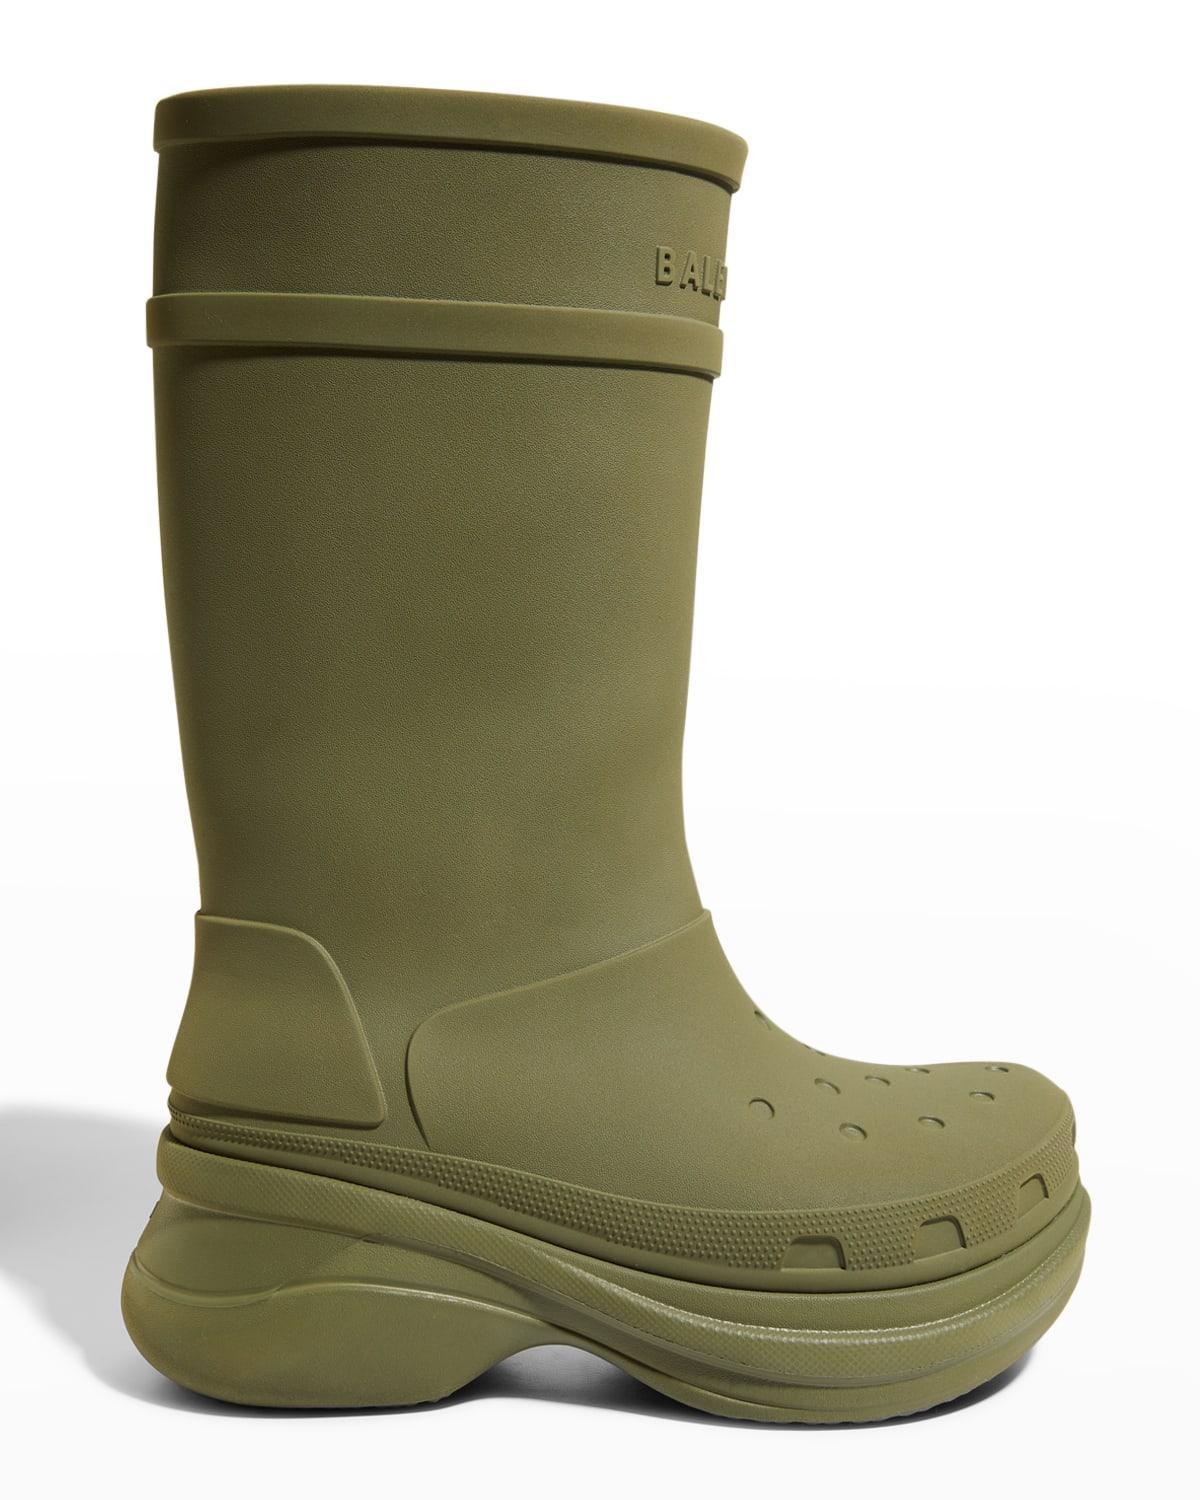 Mens Crocs Boot Product Image